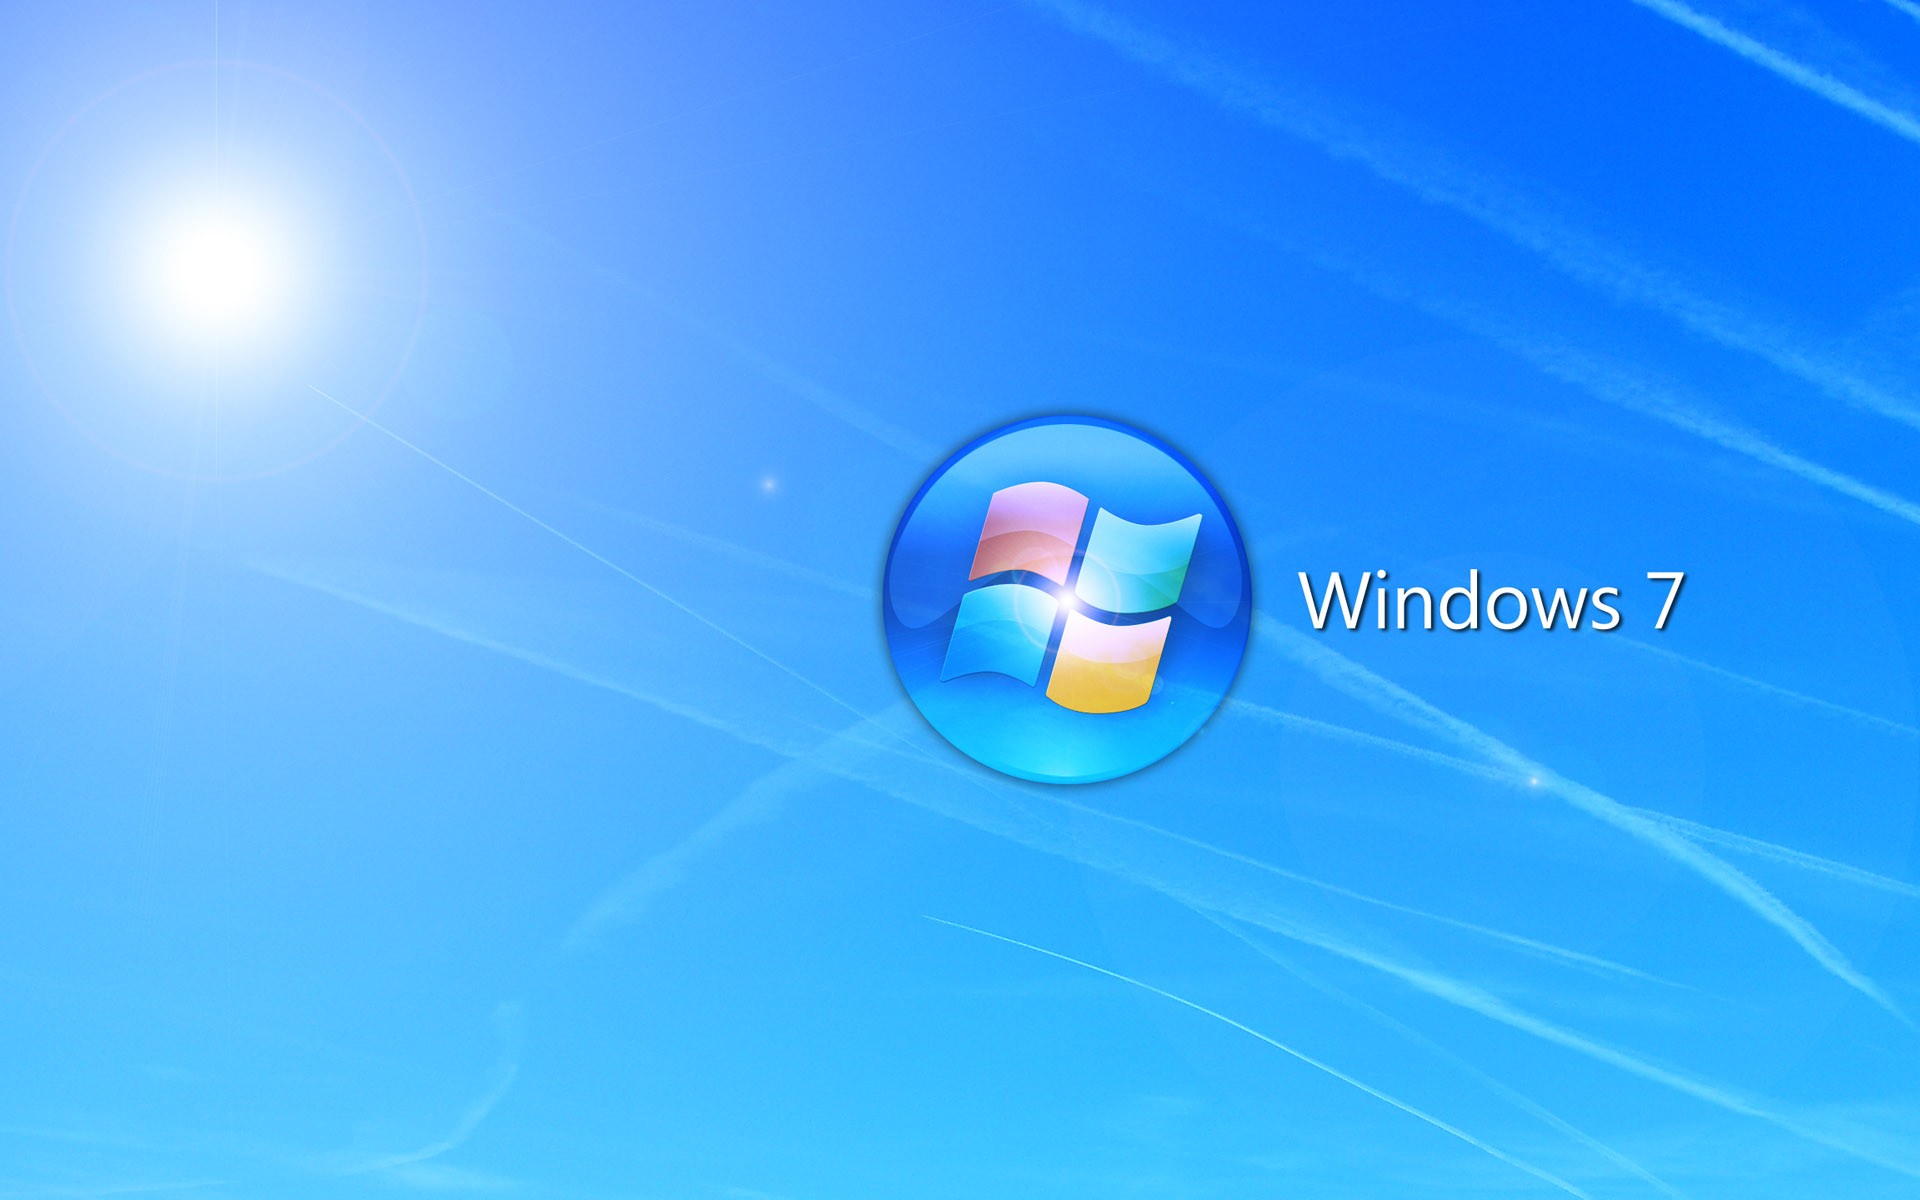 Free download Make Desktop Wallpaper Full Screen Windows 7 Desktop